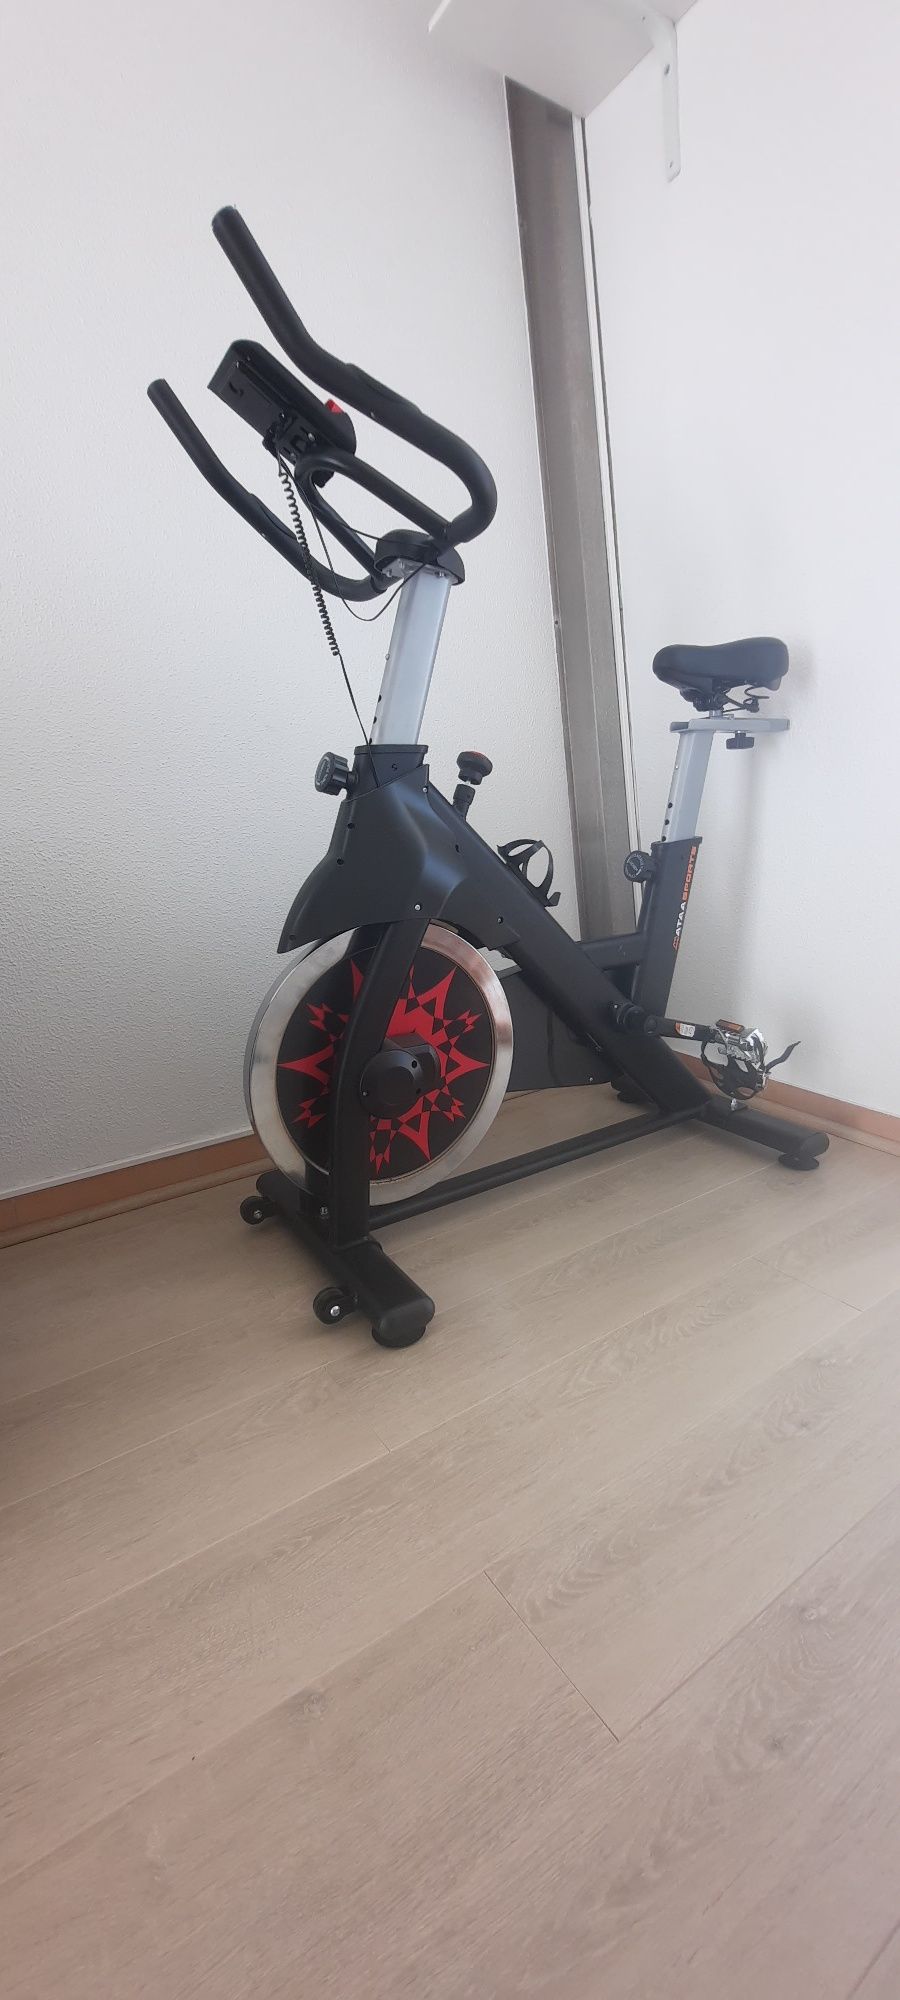 Bicicleta indoor/spining/estatica